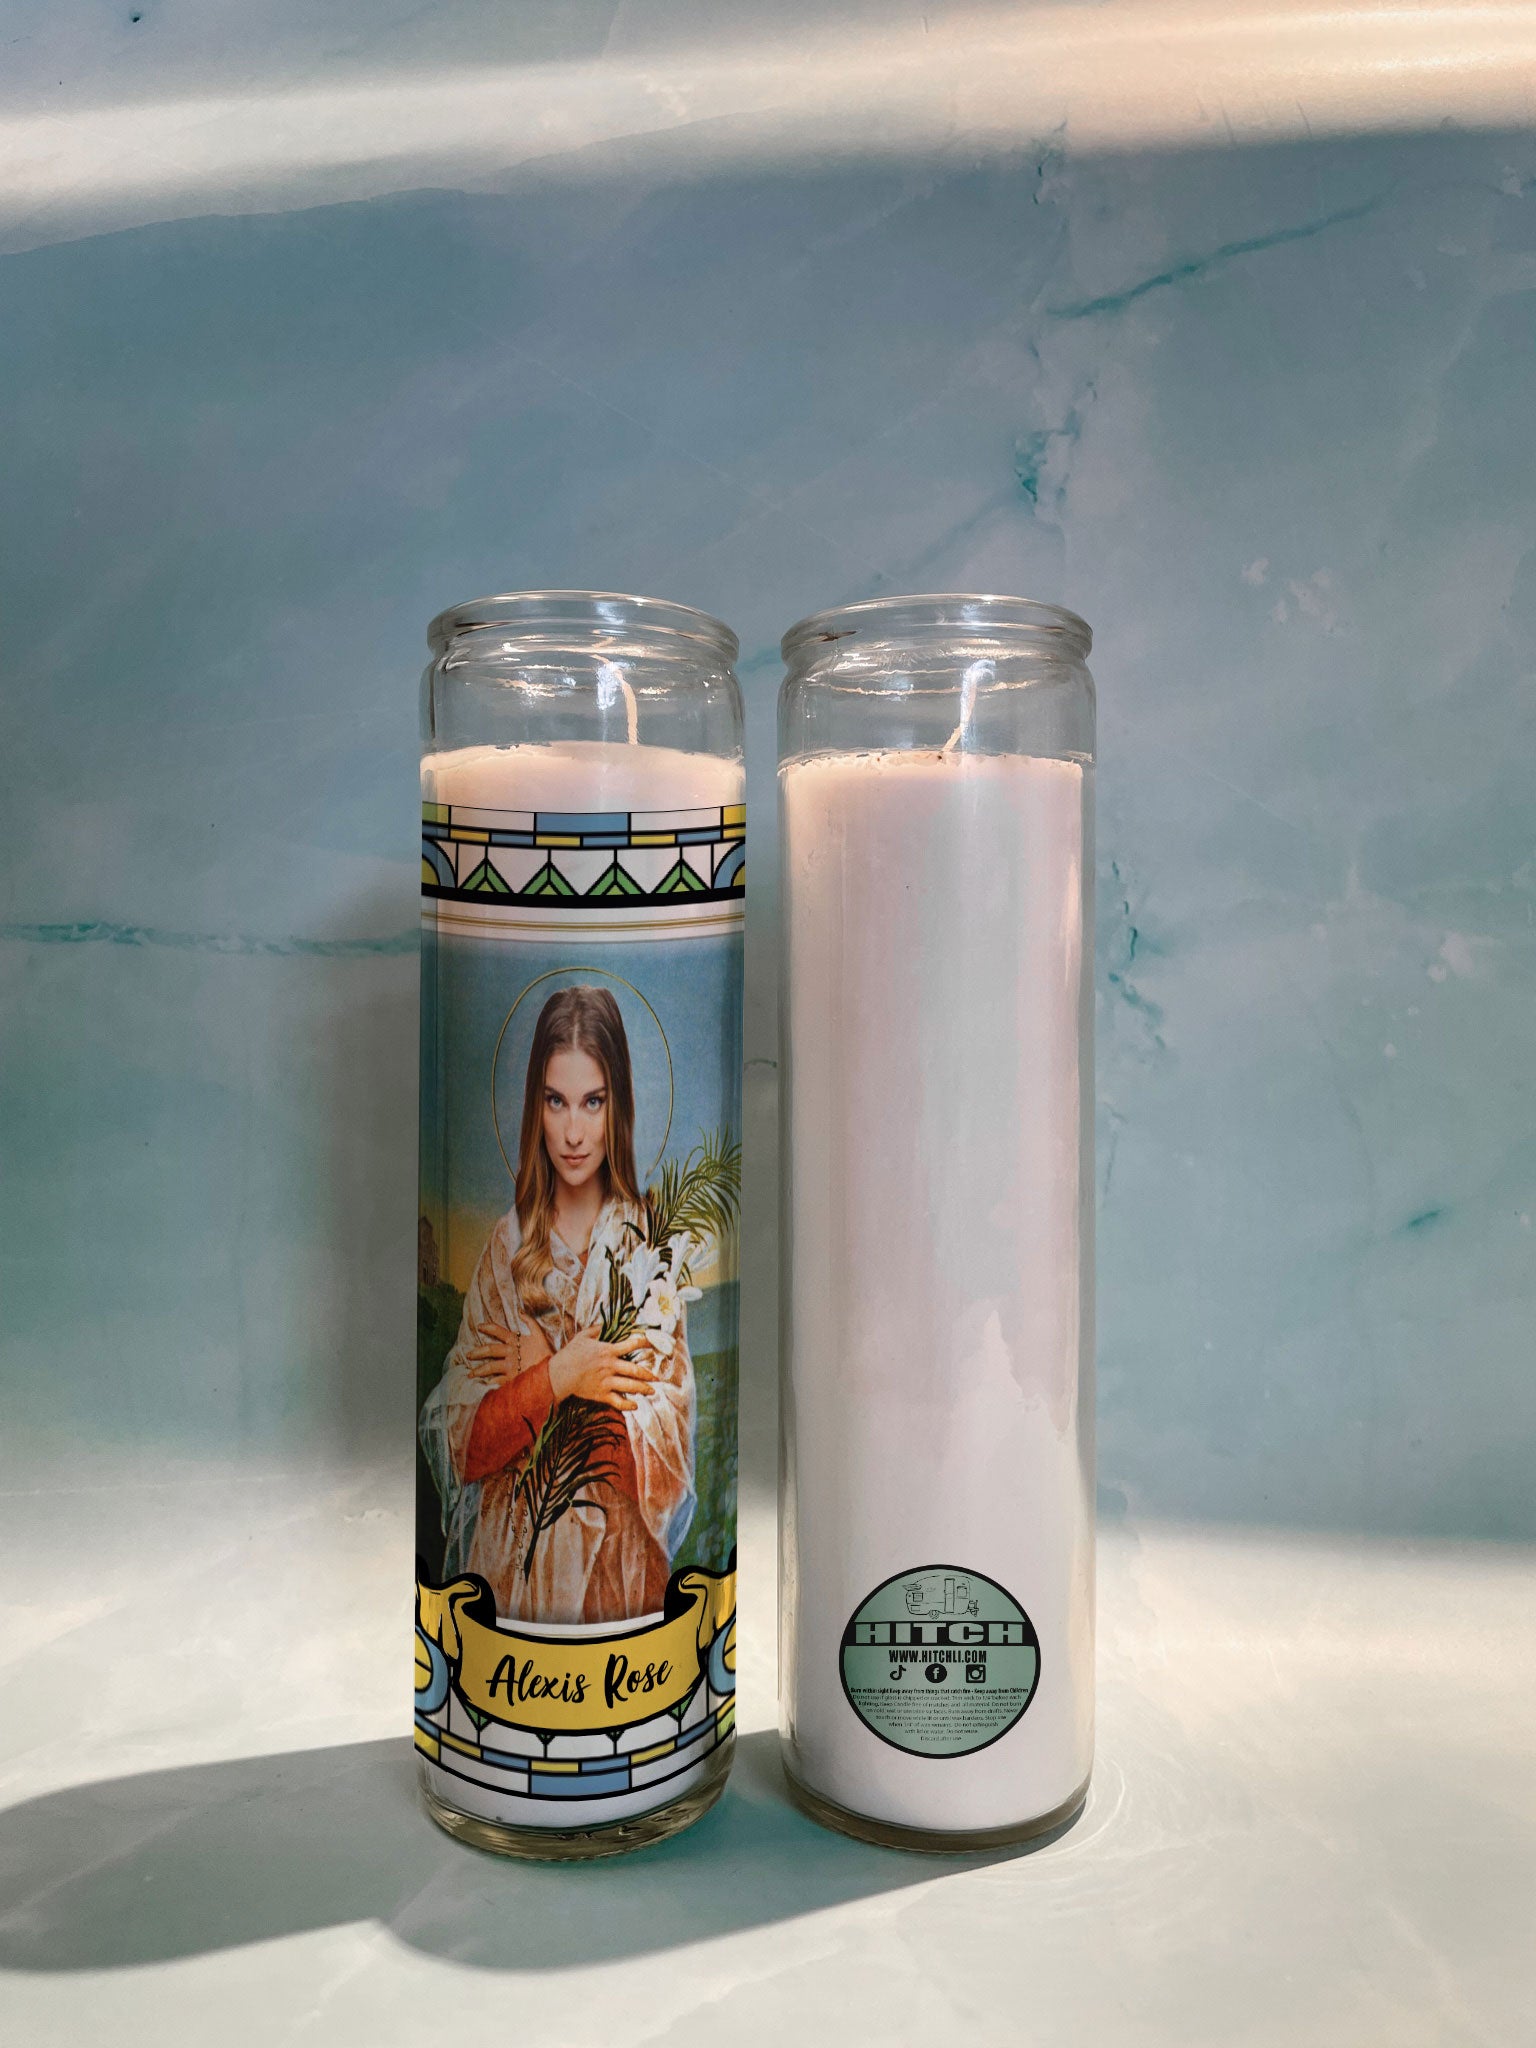 Alexis Rose Original Prayer Candle